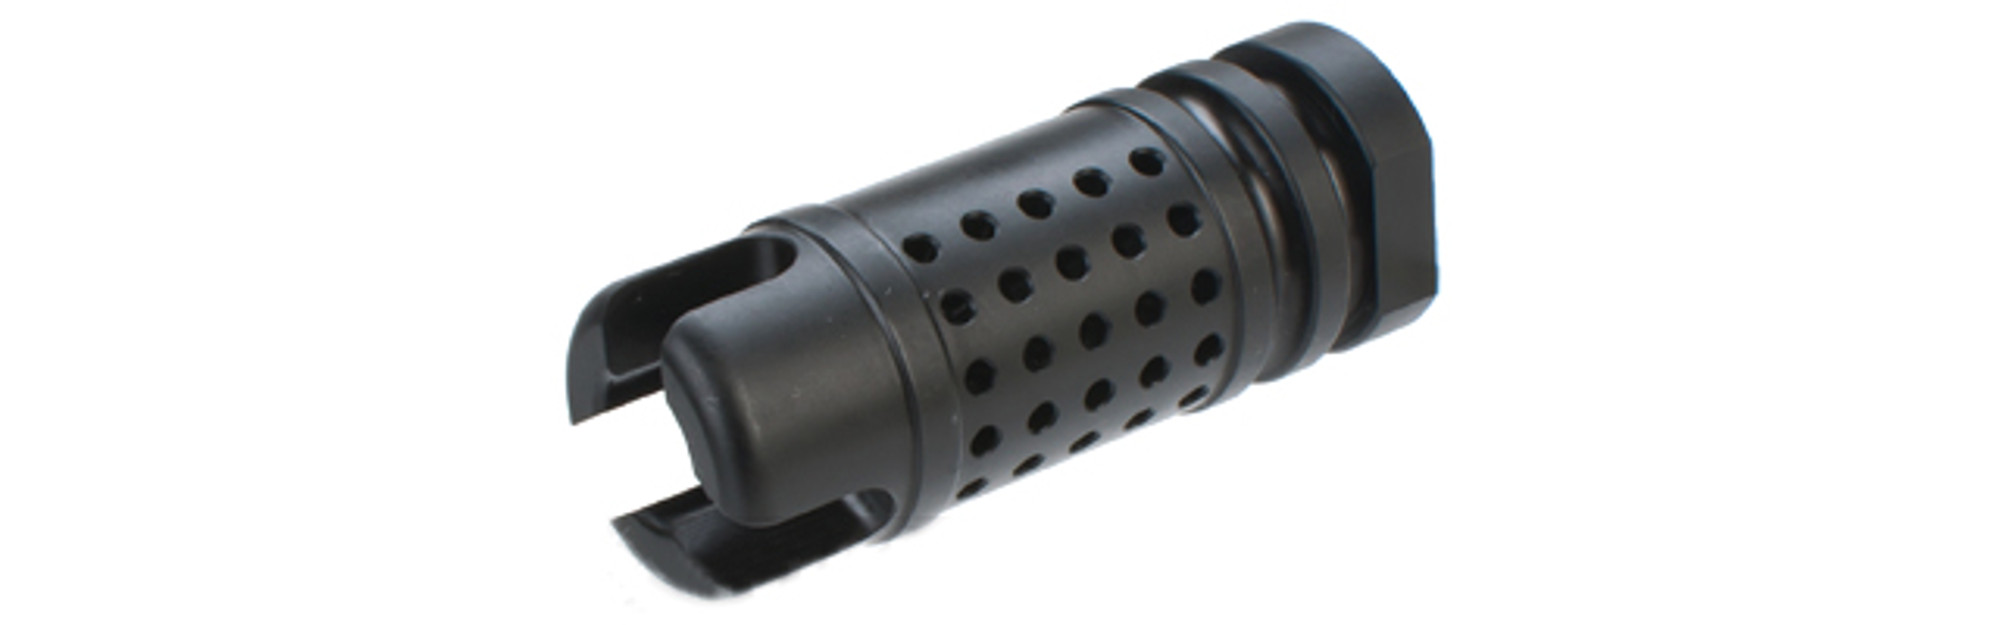 PTS M4SDII Airsoft Flash Compensator - 14mm Negative